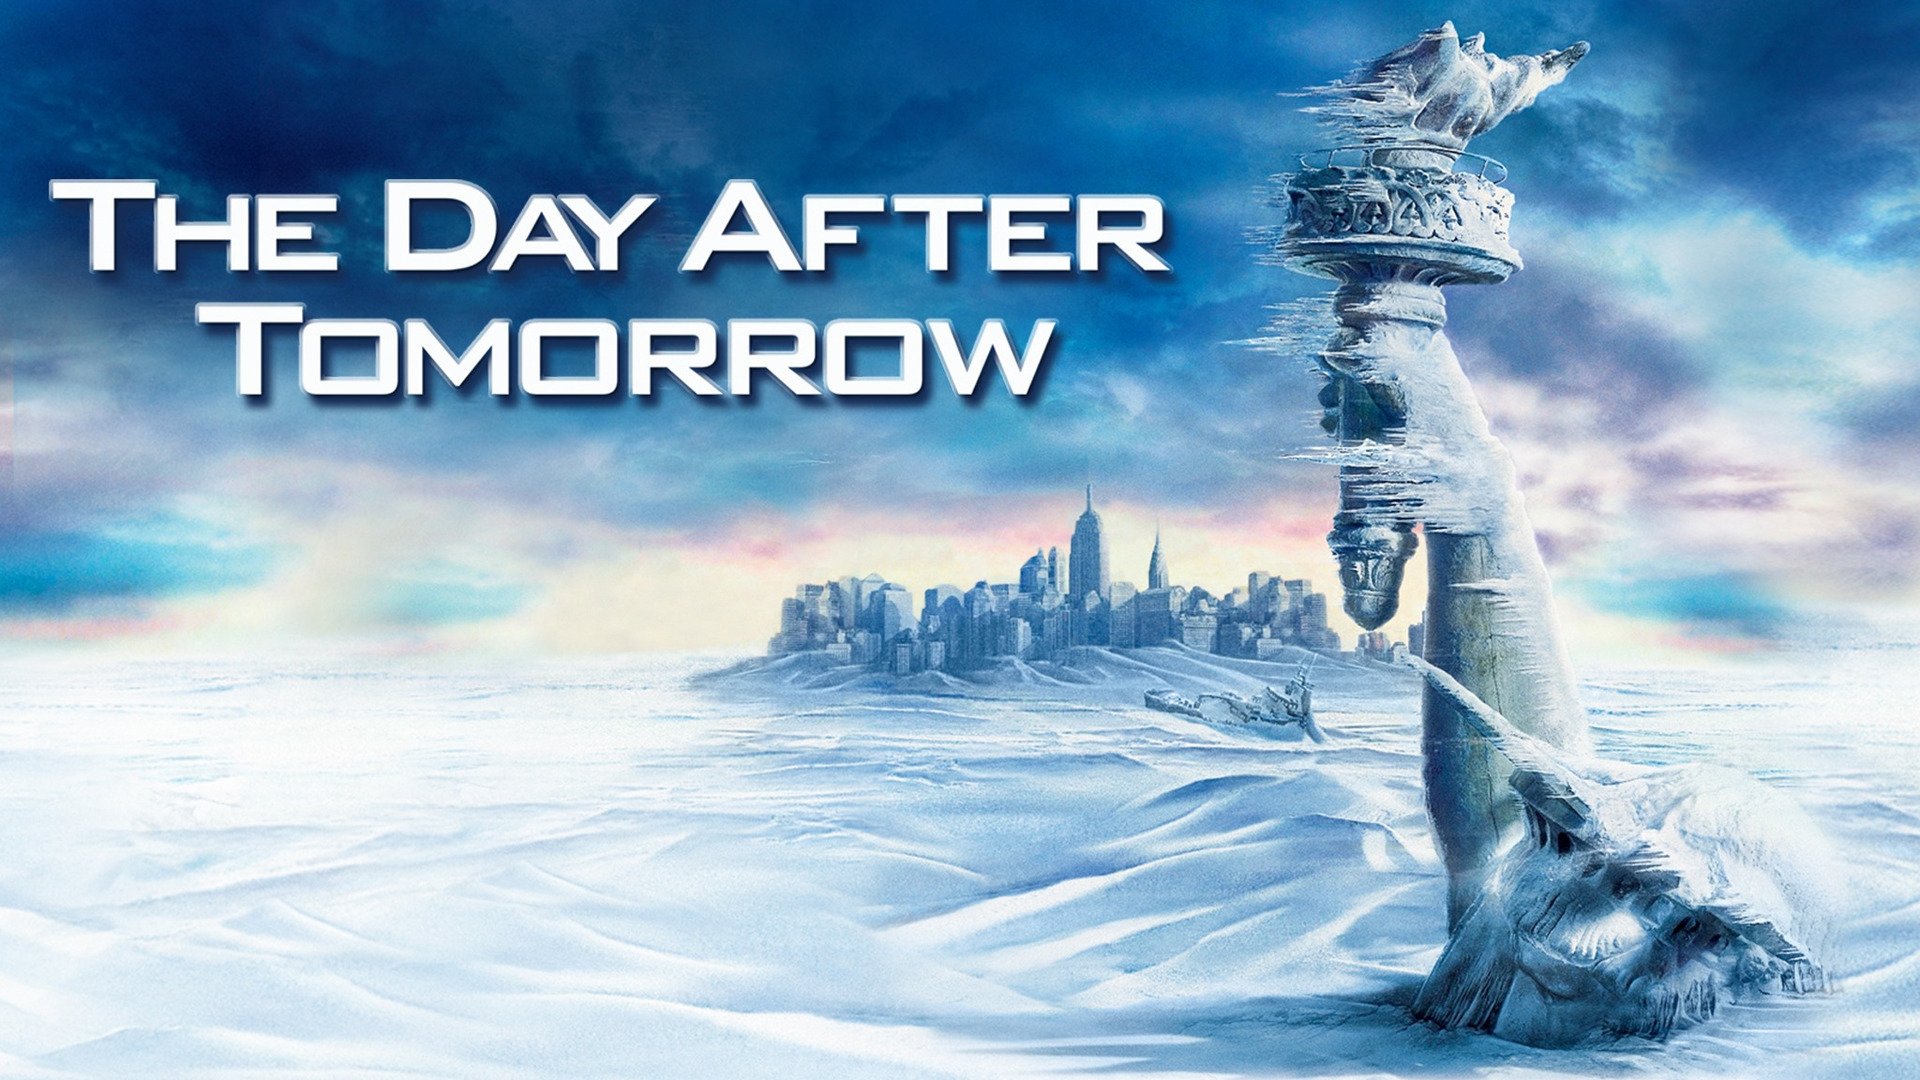 The Day After Tomorrow - Streama online eller via vår app - Comhem Play